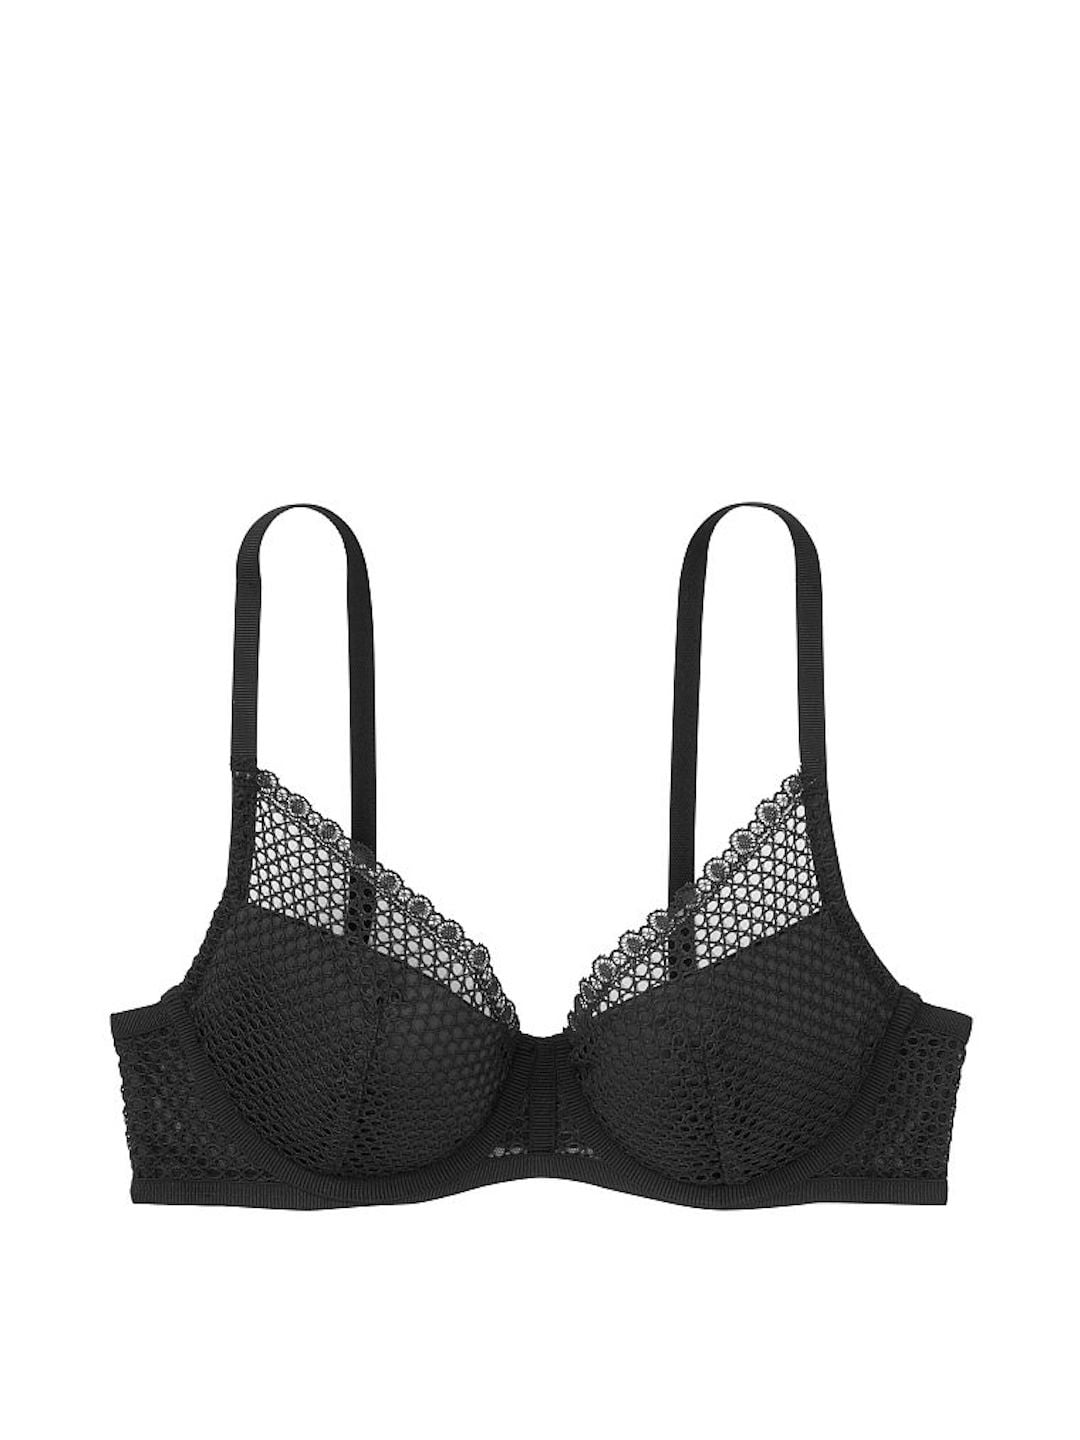 New Victoria secret bra size 32D - Bras